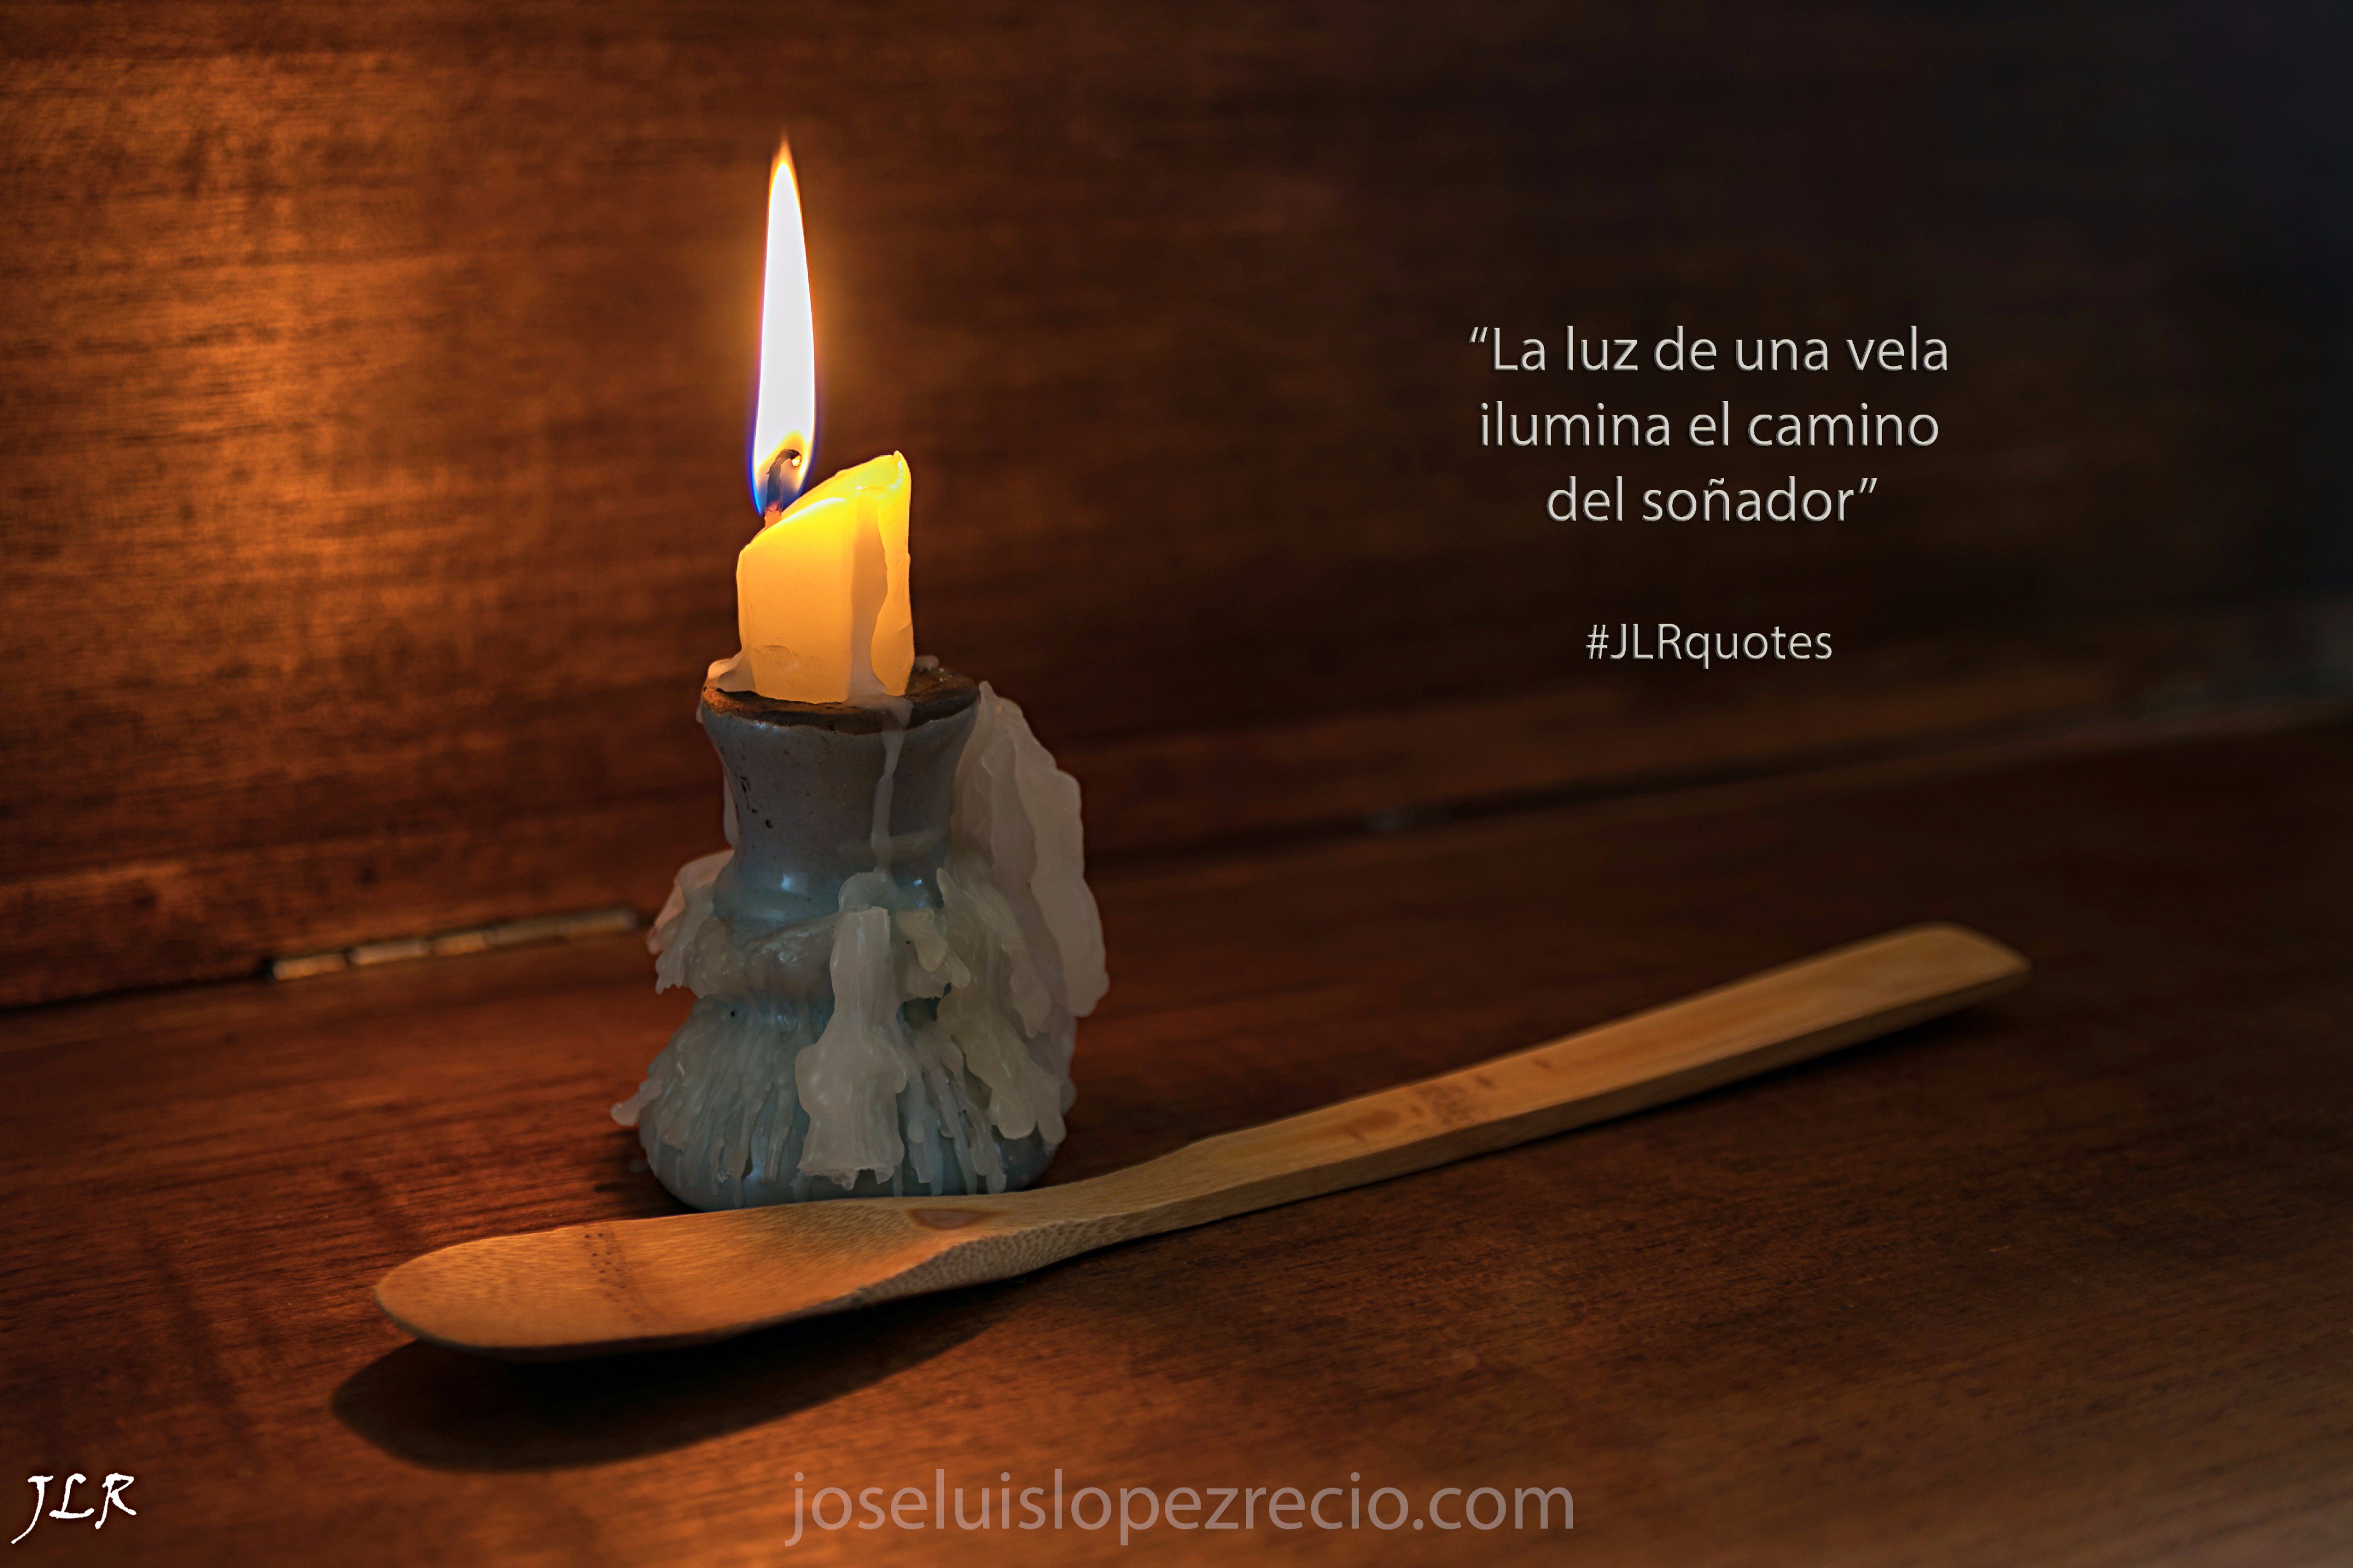 Monica Escabullirse medio 𝐉𝐨𝐬𝐞́ 𝐋𝐮𝐢𝐬 𝐋𝐨́𝐩𝐞𝐳 𝐑𝐞𝐜𝐢𝐨 on Twitter: ".@leeres "La luz de  una vela ilumina el camino del soñador" #JLRquotes #escribir #bodegón  https://t.co/HFyV3vINnw" / Twitter